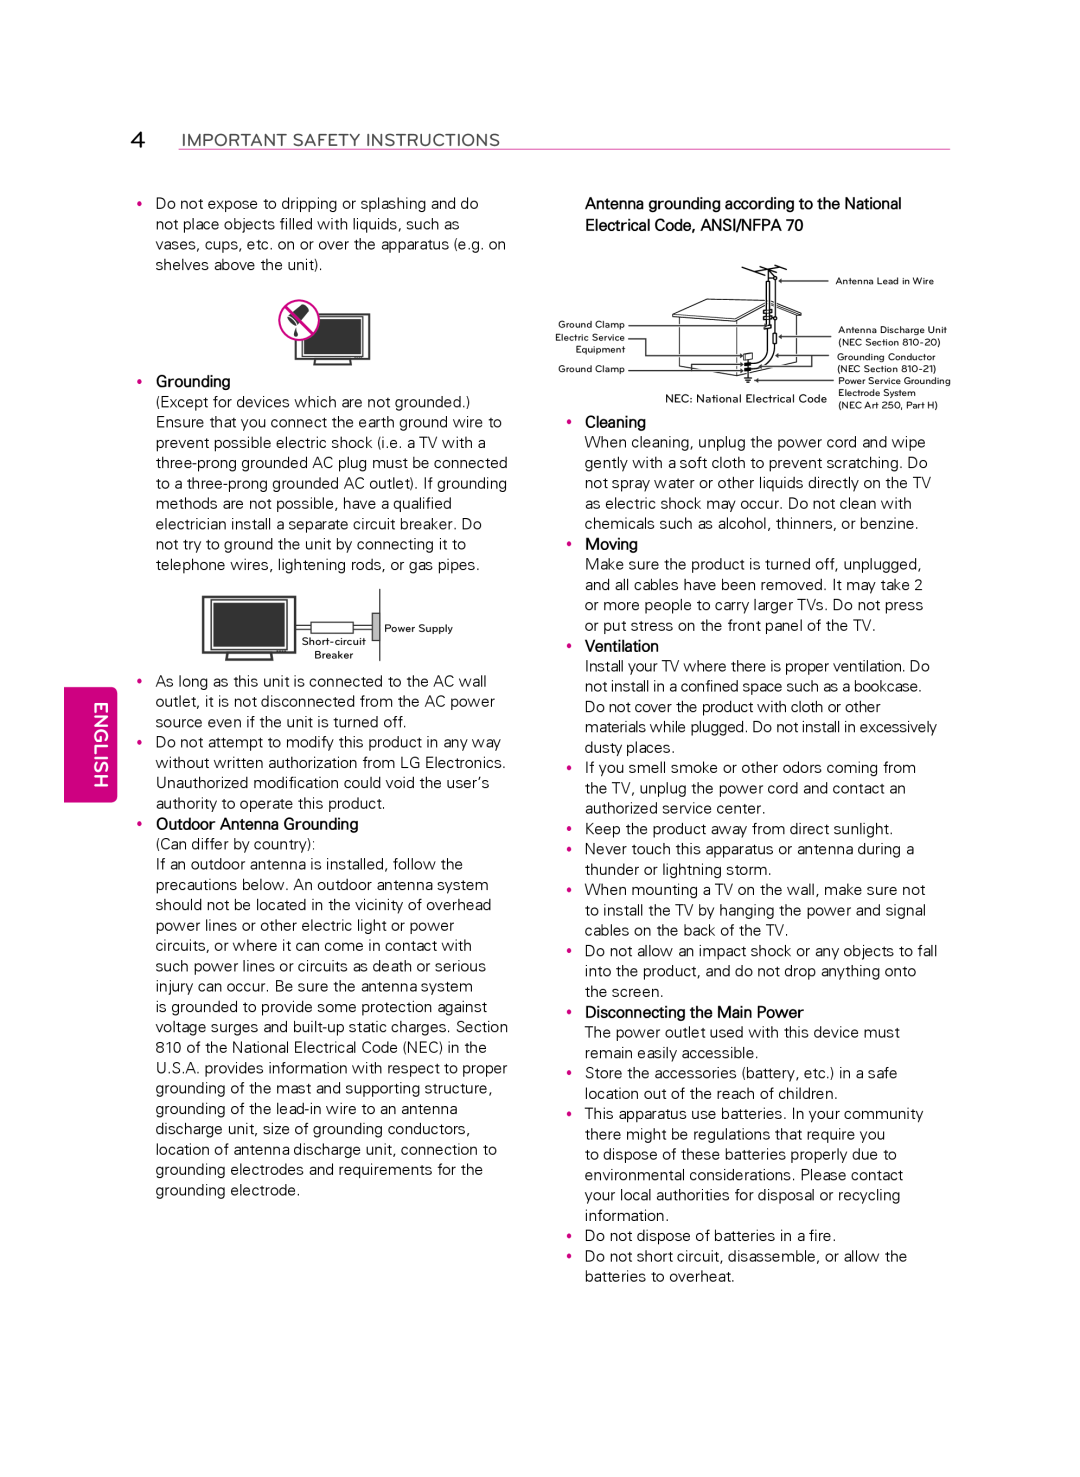 LG Electronics 55LA9650 English, Important Safety Instructions, yyGrounding, yyOutdoor Antenna Grounding, yyCleaning 